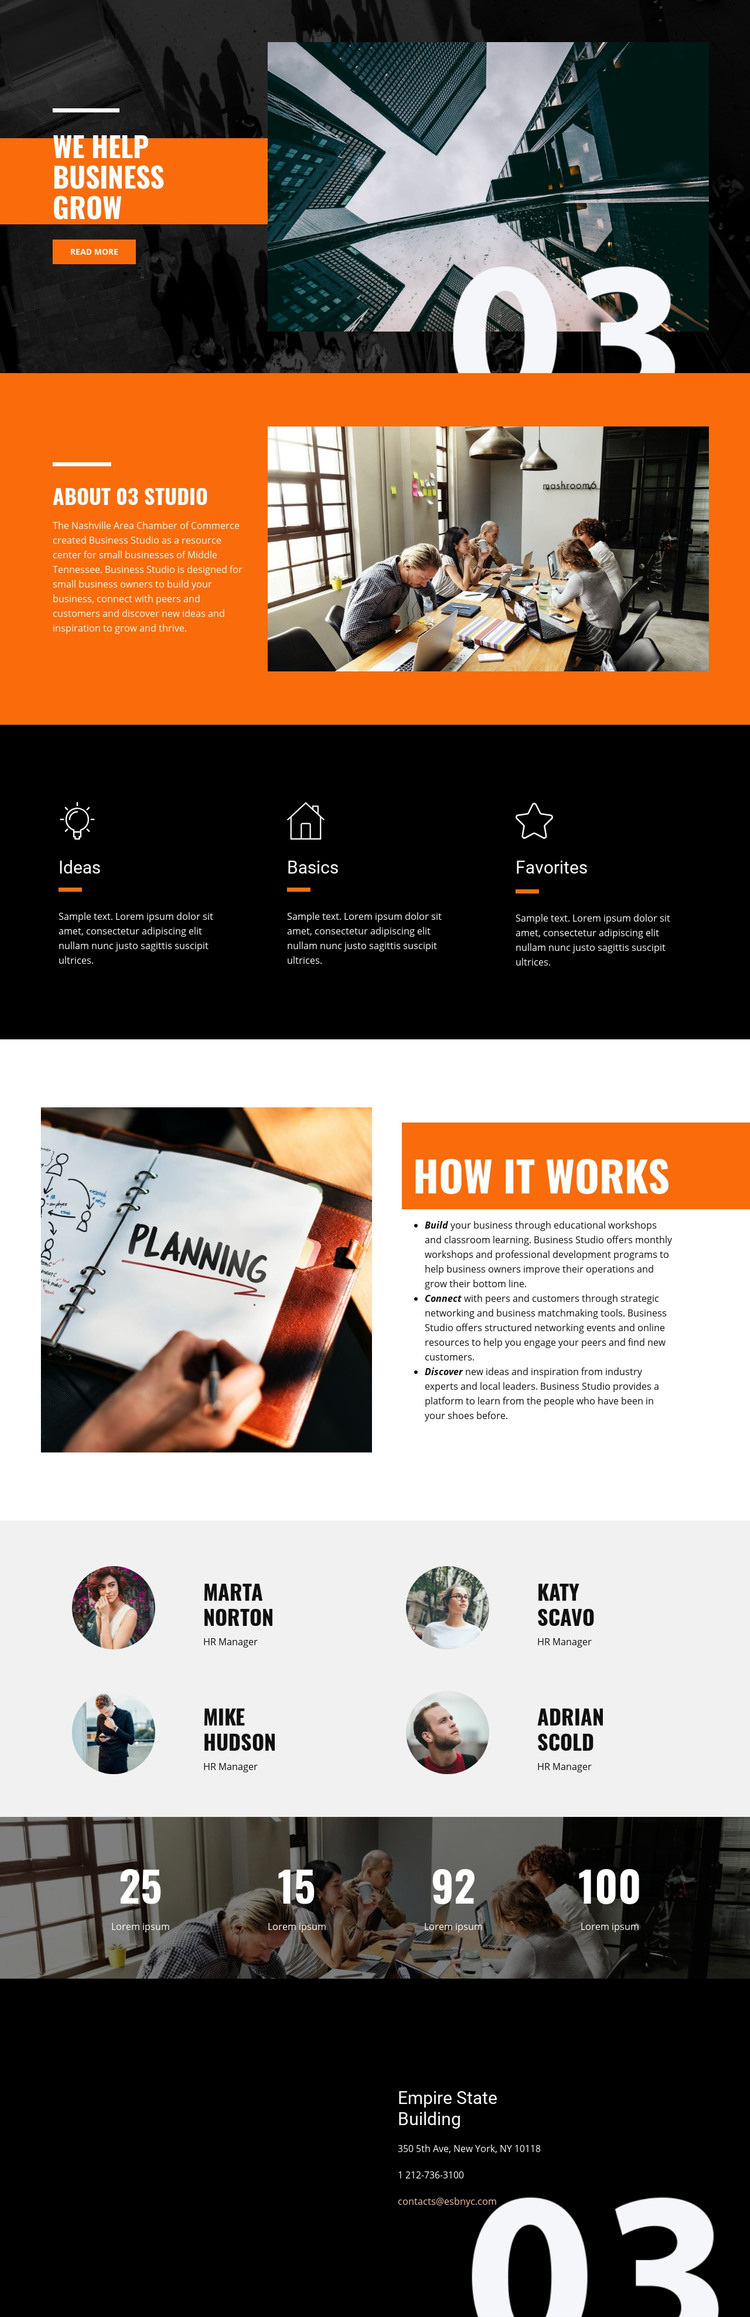 Business Grow Homepage Design